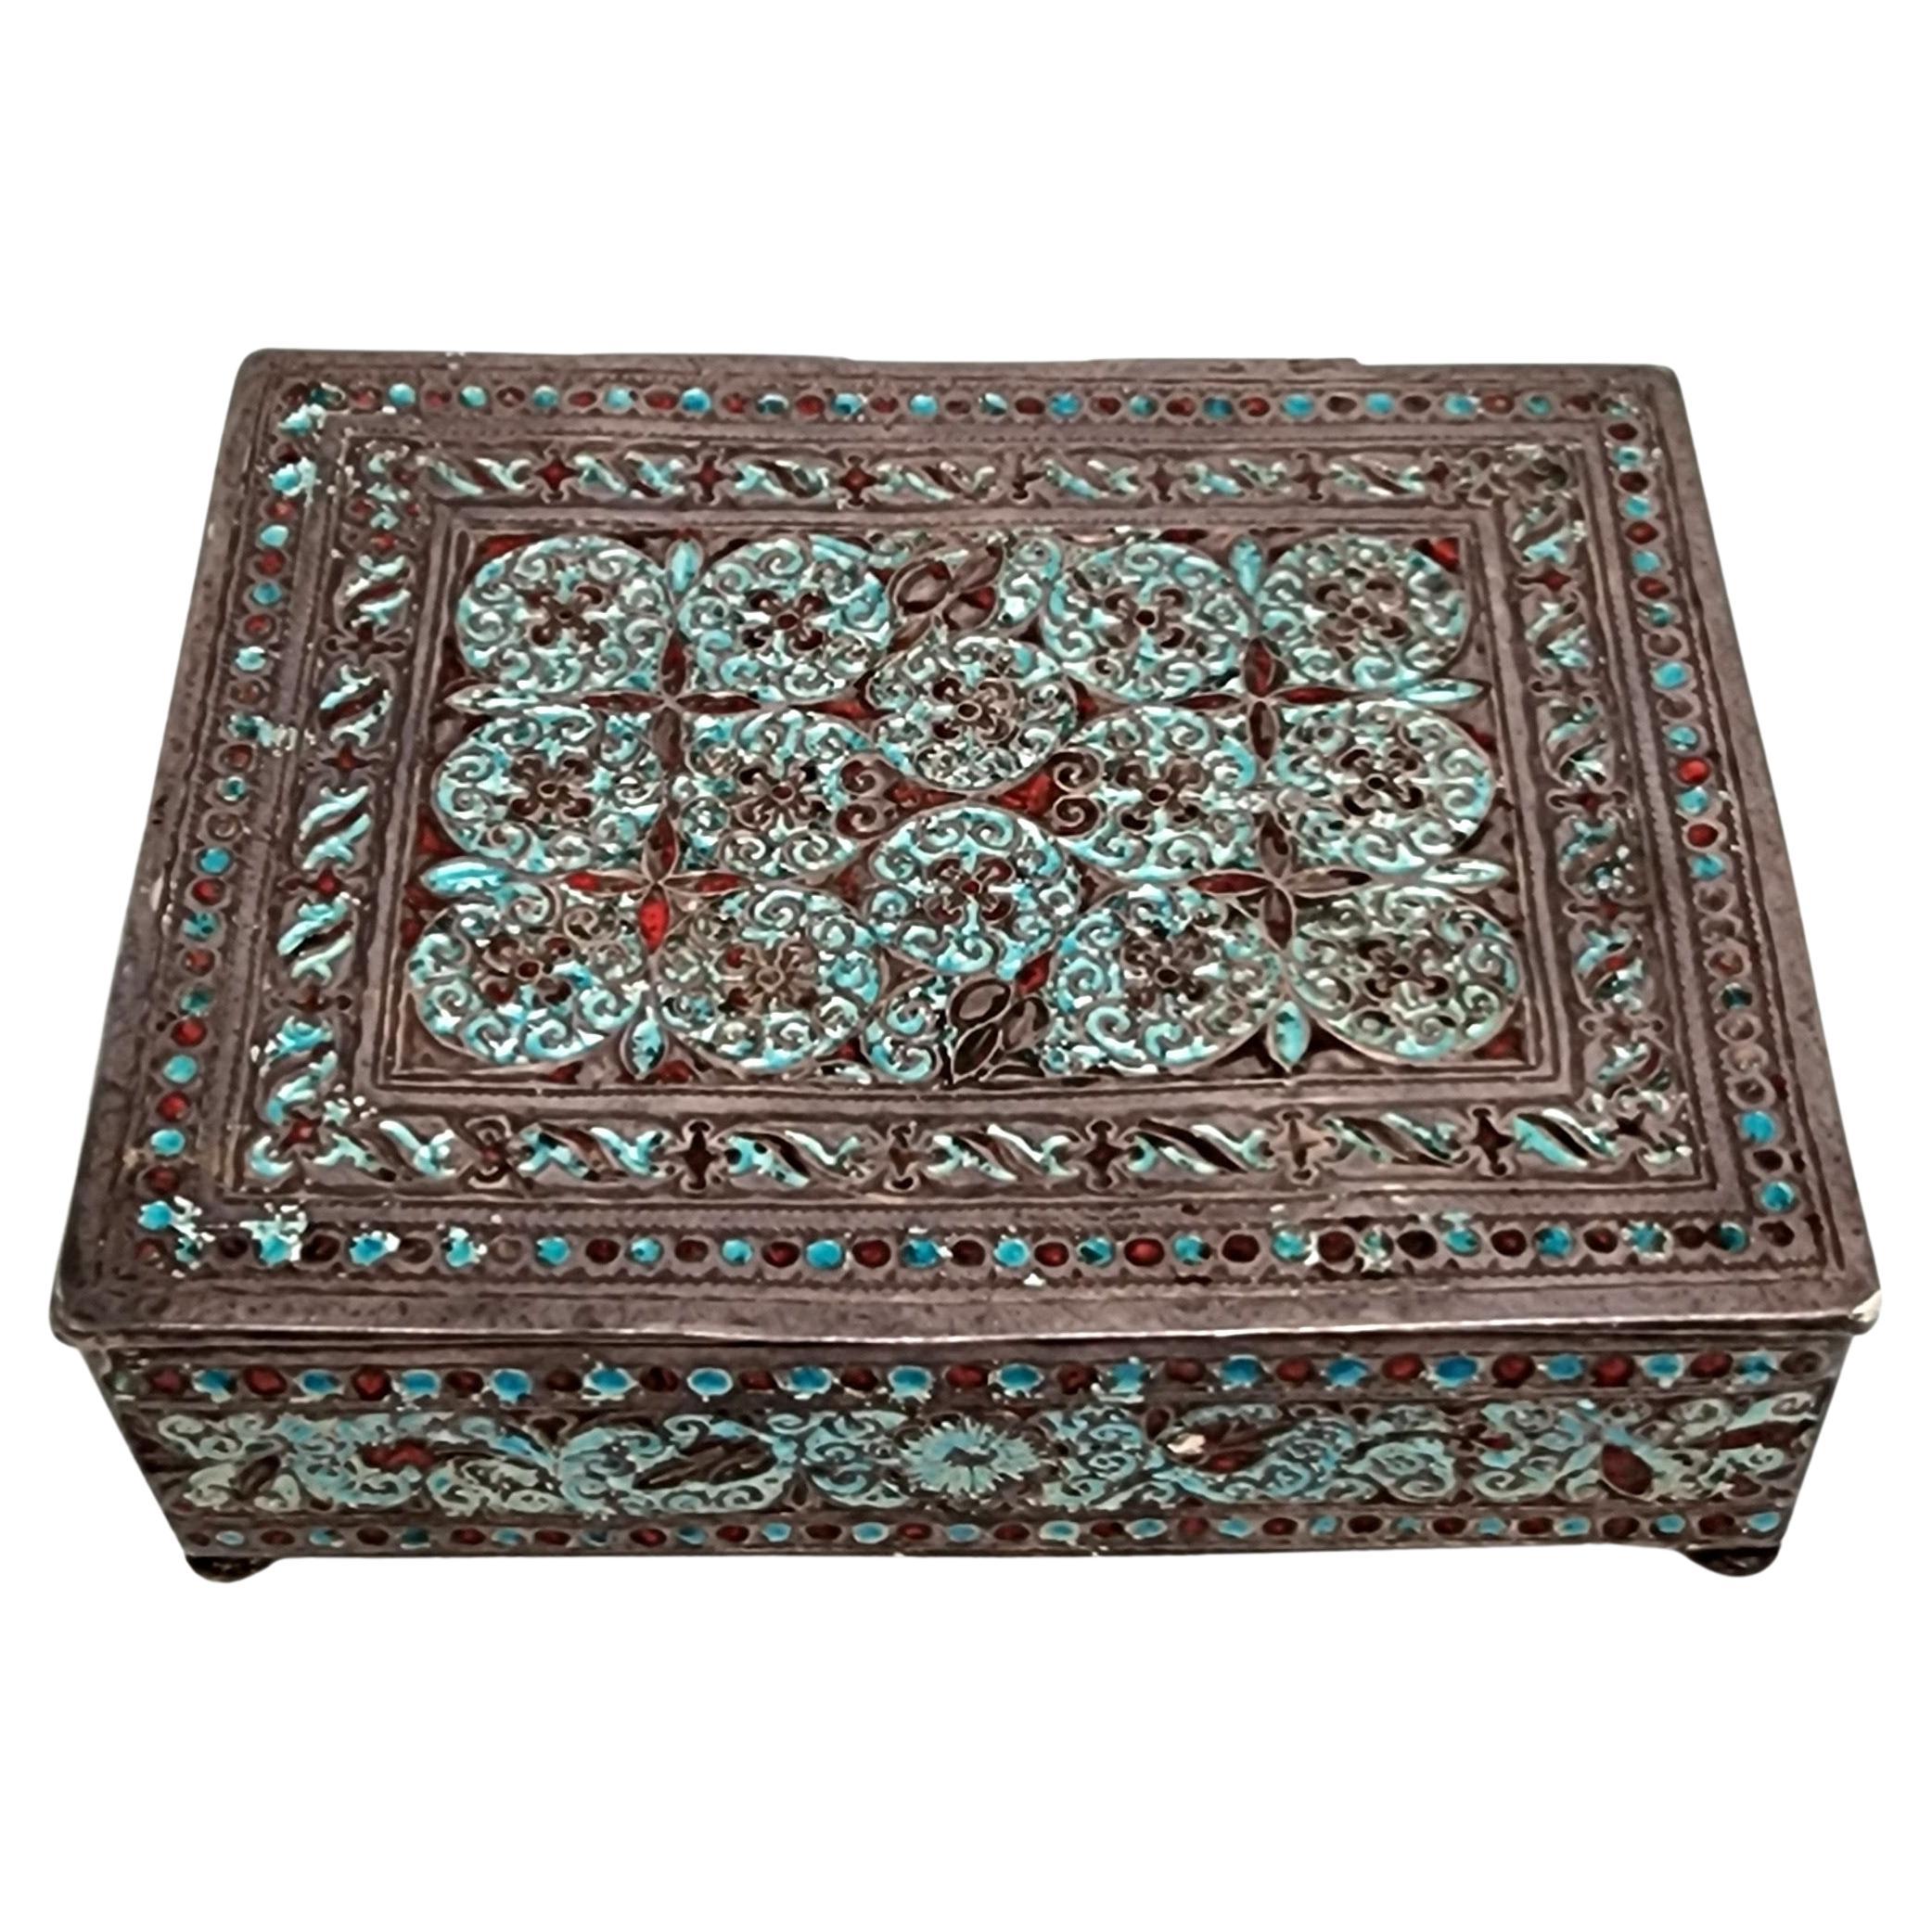 Handmade Middle Eastern Silver Enamel Box